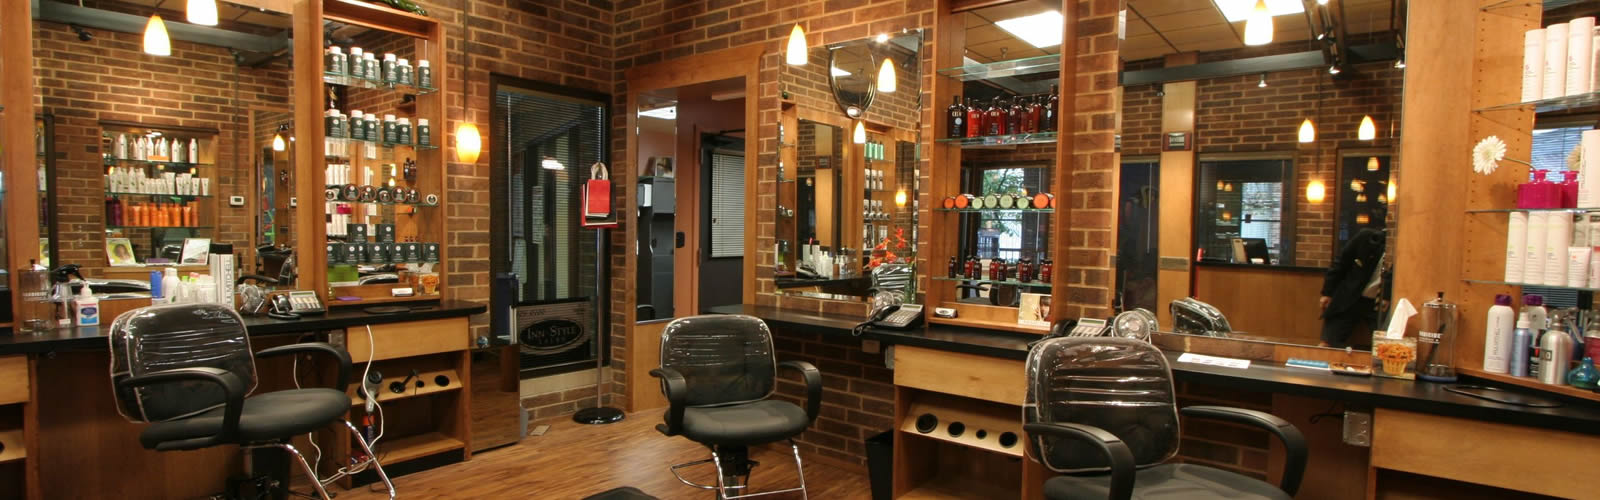 Ann Arbor MI Professional Hair Salon Inn Style Salon